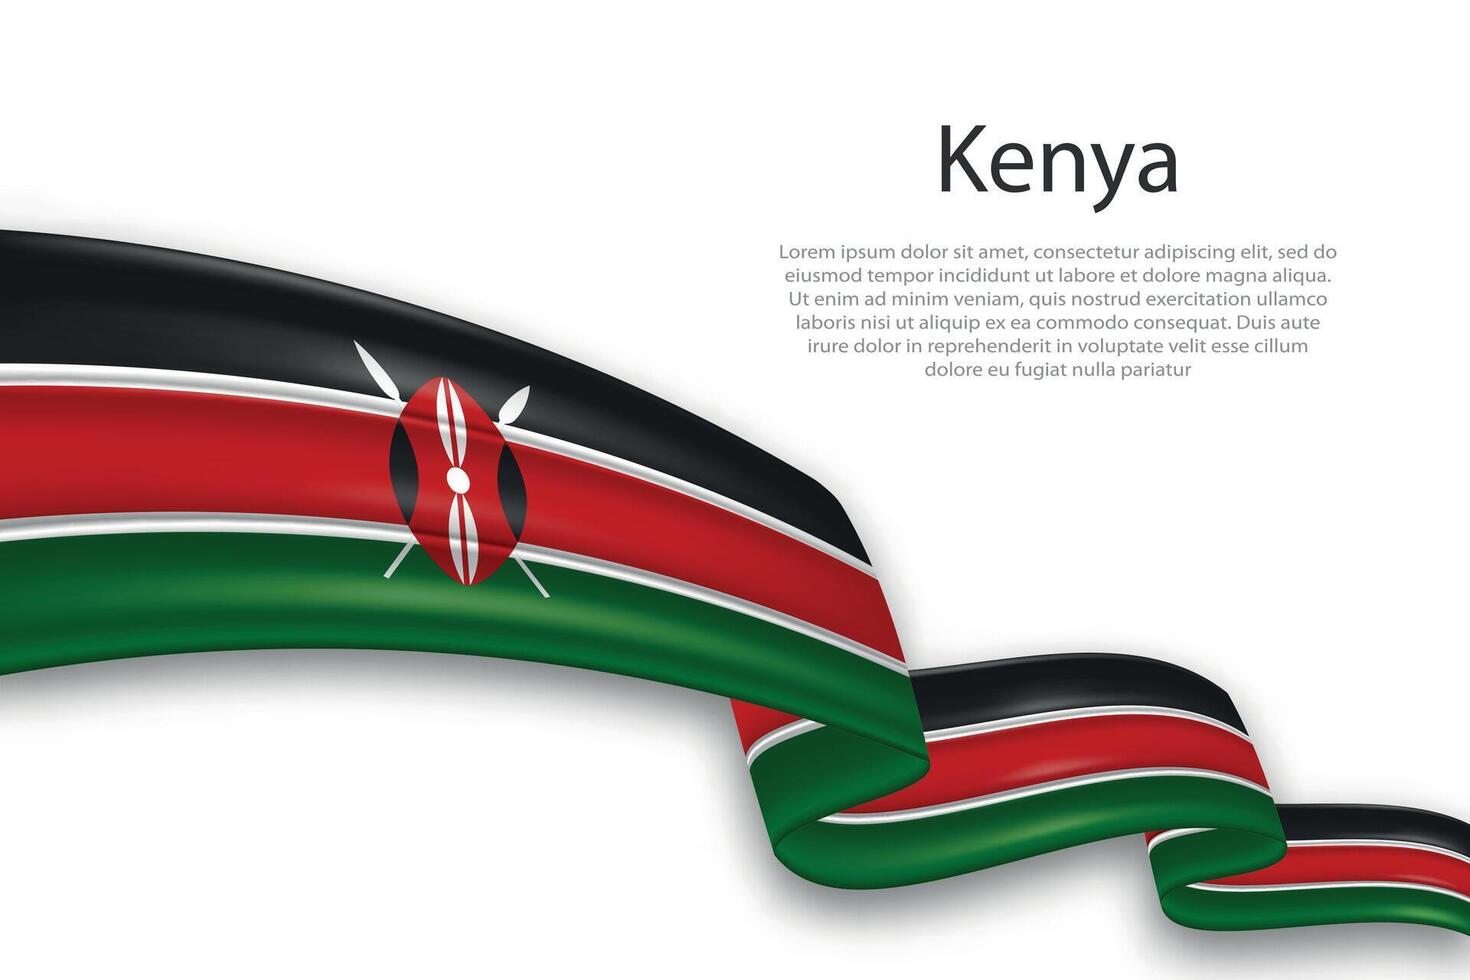 abstrakt vågig flagga av kenya på vit bakgrund vektor